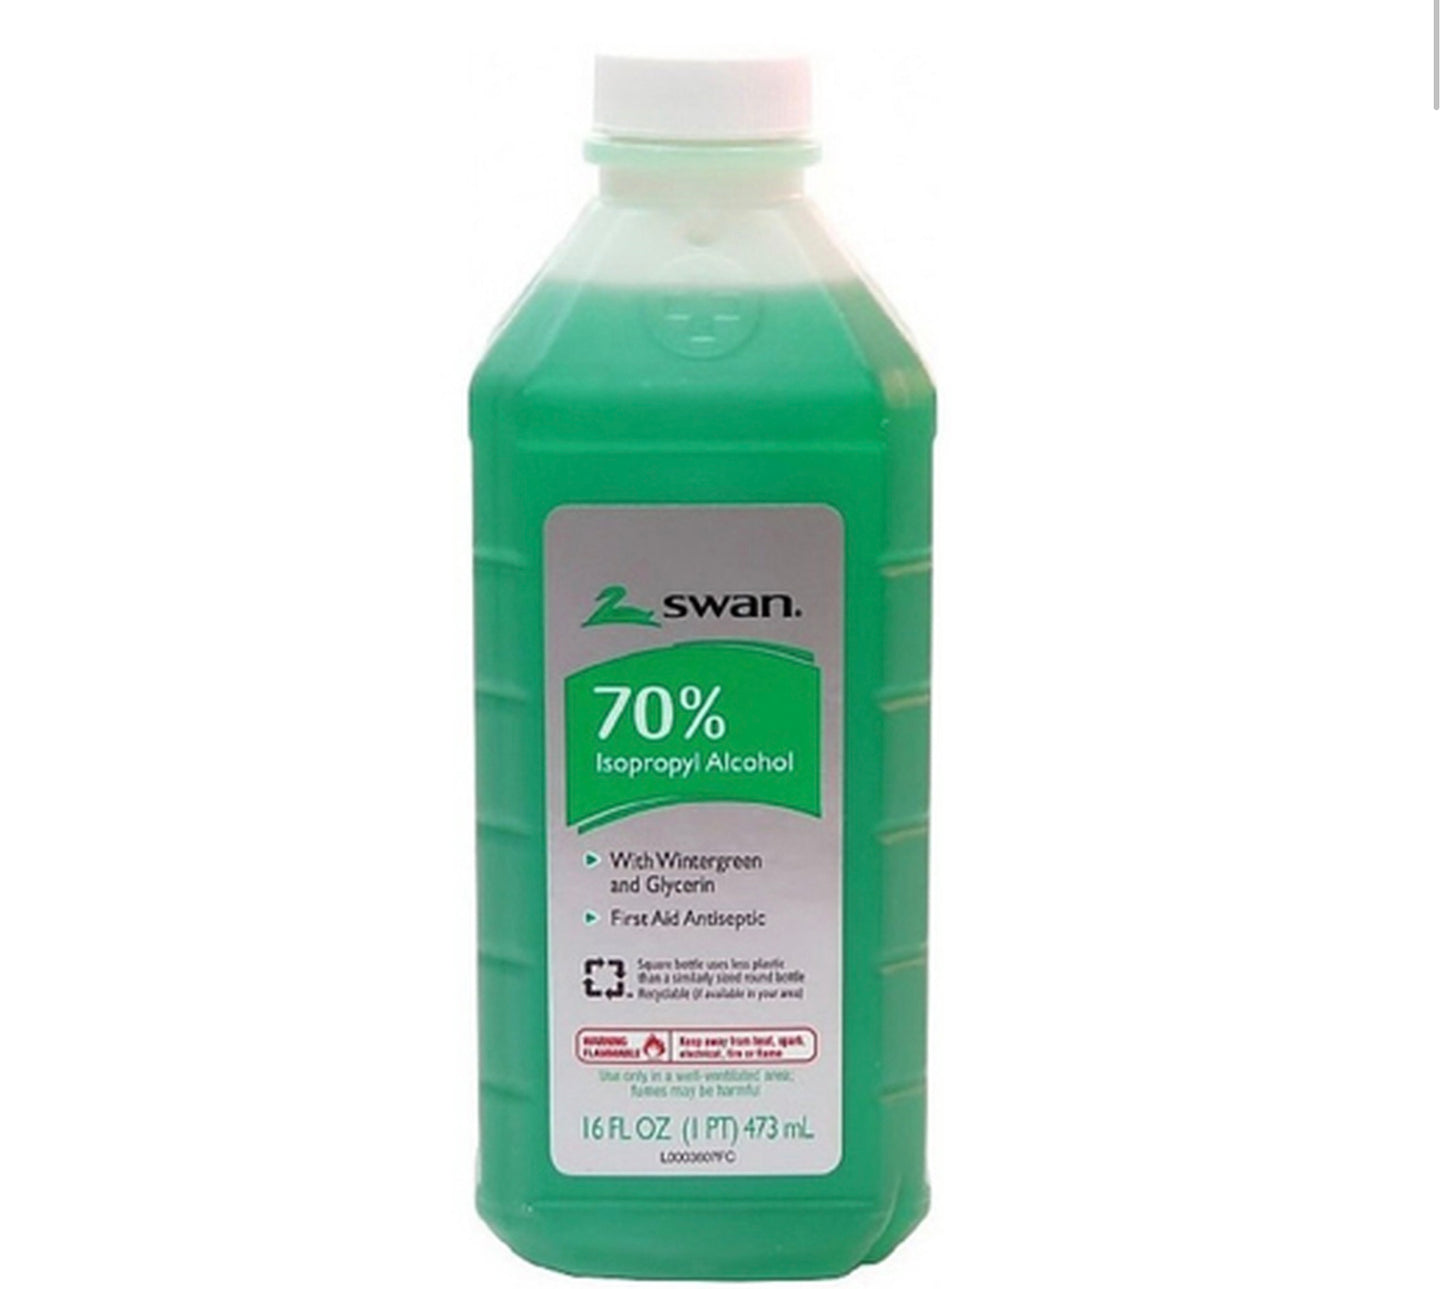 Swan 70 % Isopropyl Alcohol Wintergreen - Tam's Beauty Supply 